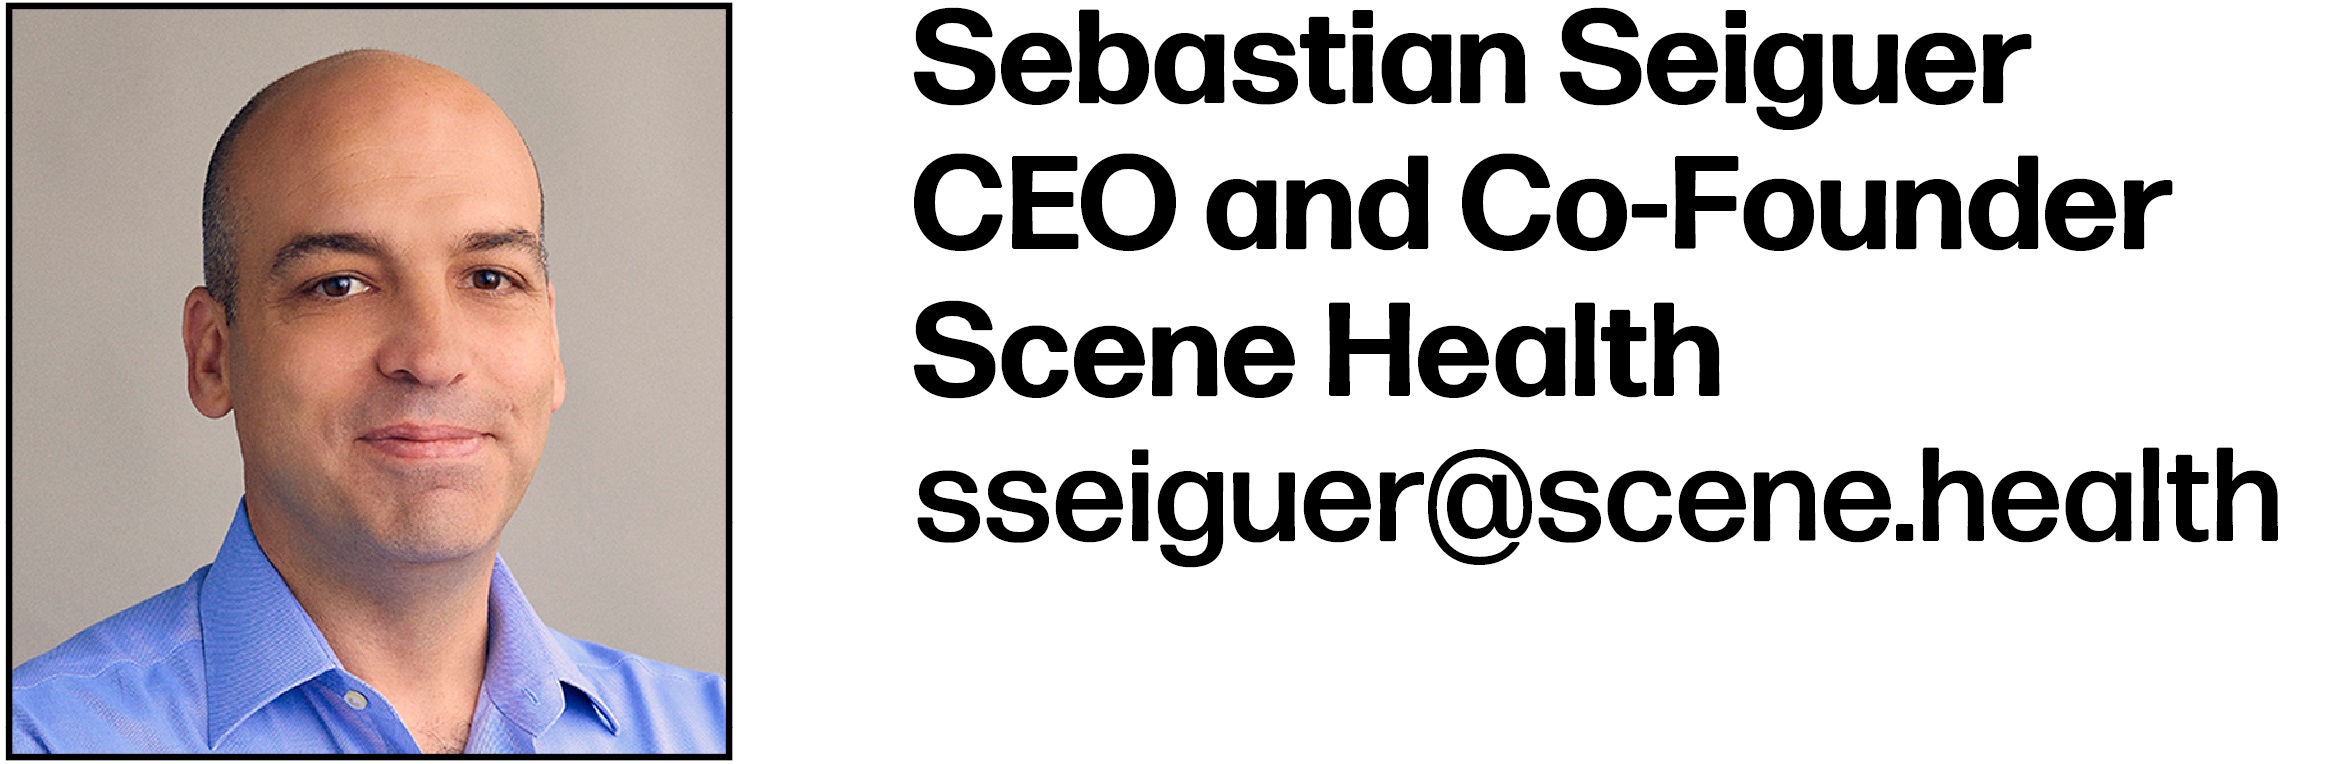 Sebastian Seiguer
CEO and Co-Founder
Scene Health
sseiguer@scene.health  